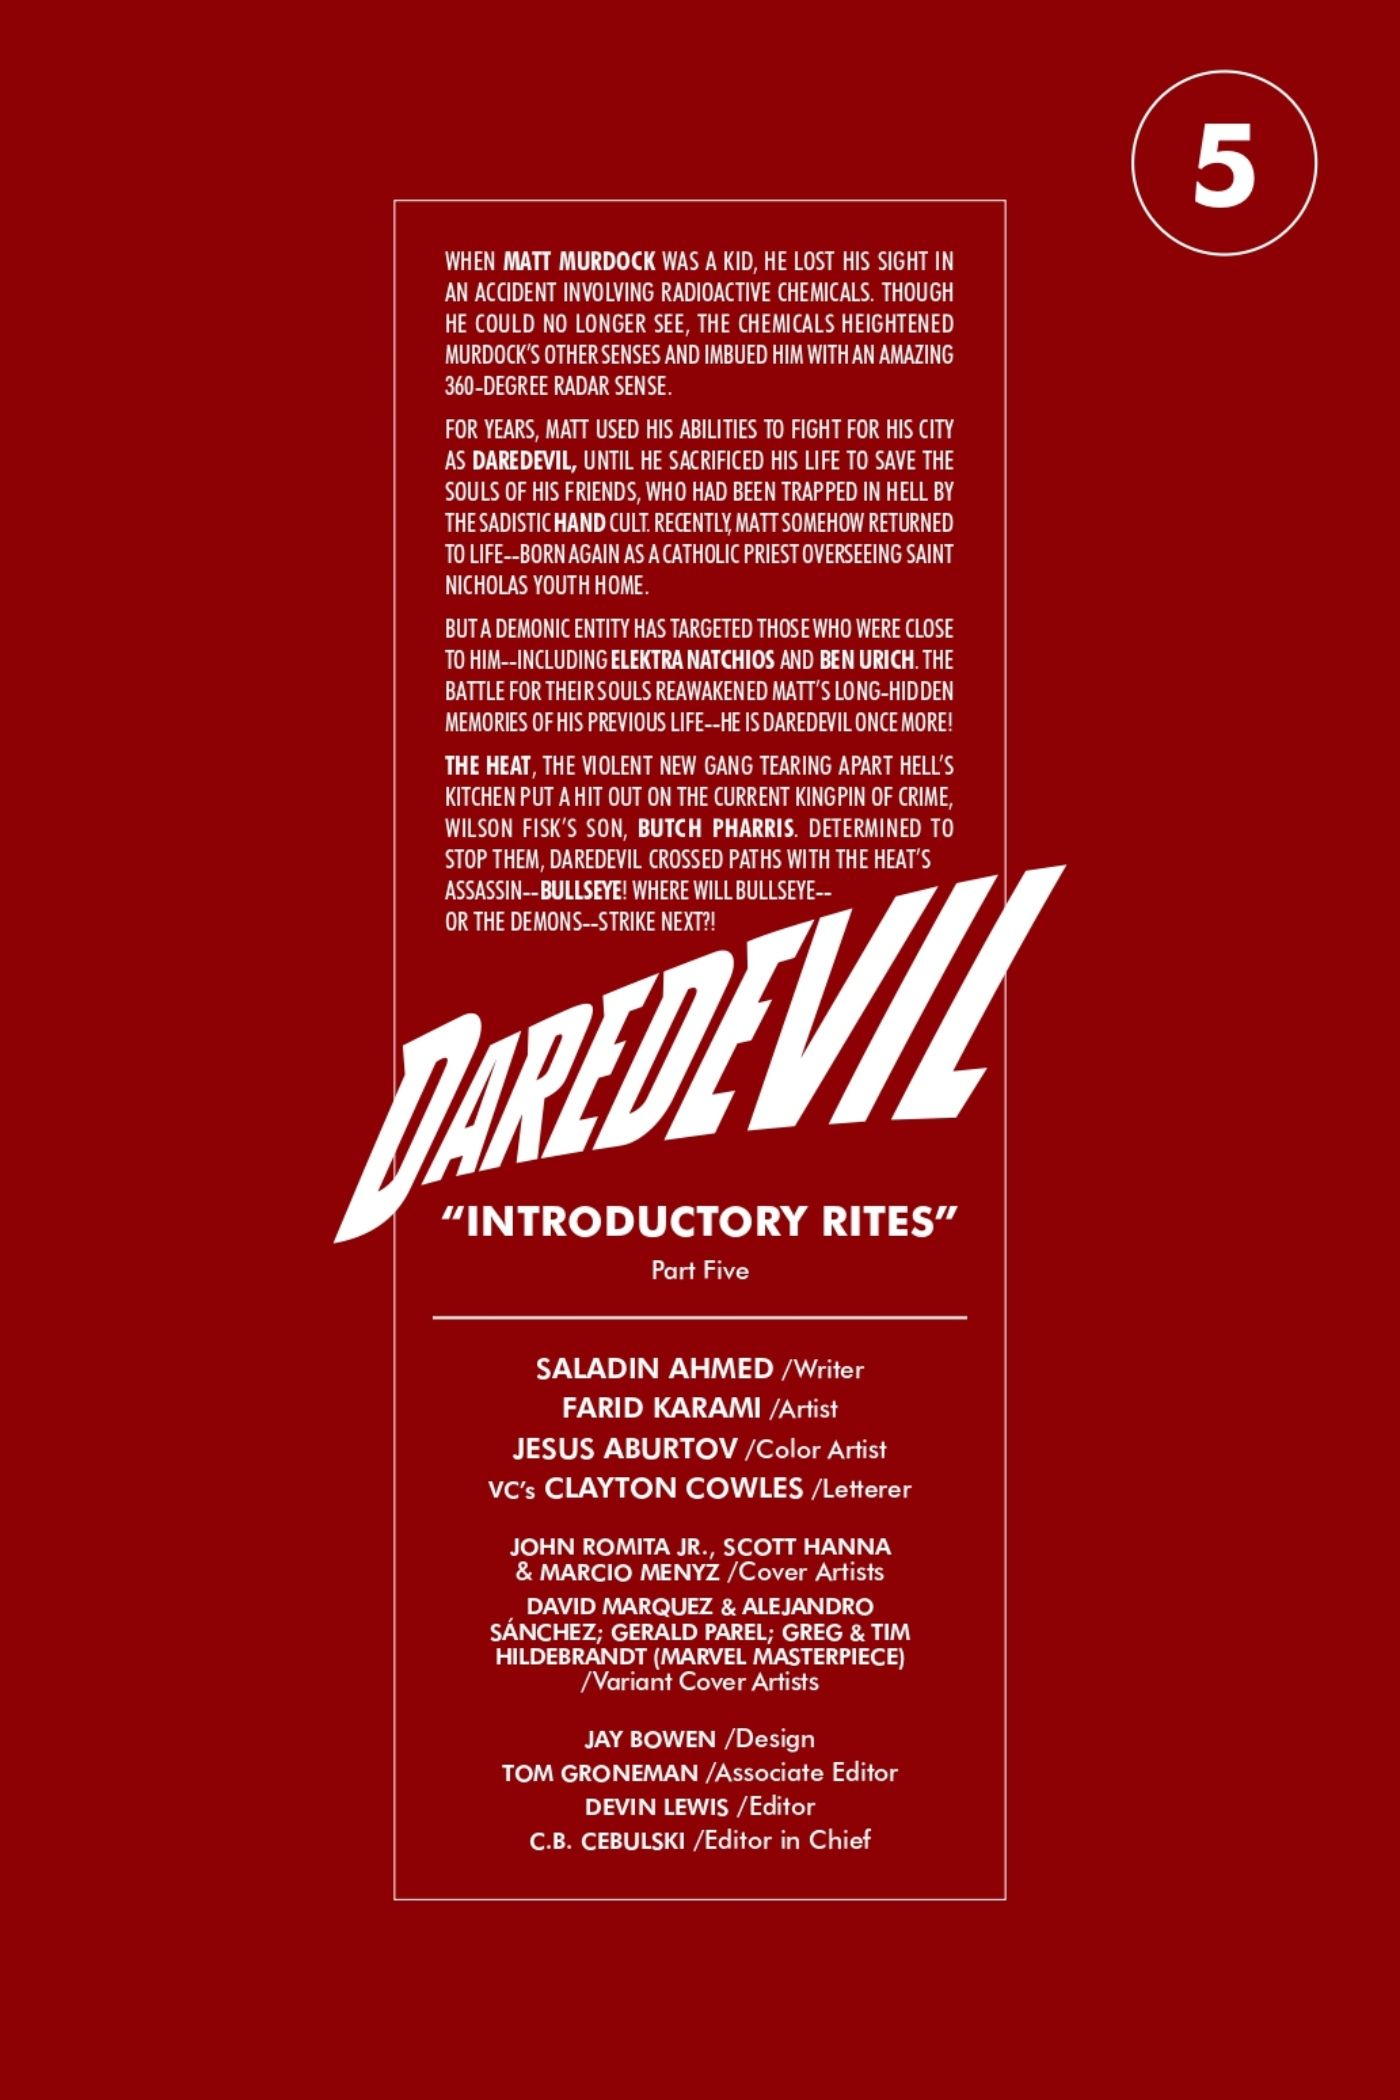 Daredevil #5 Preview page 2.